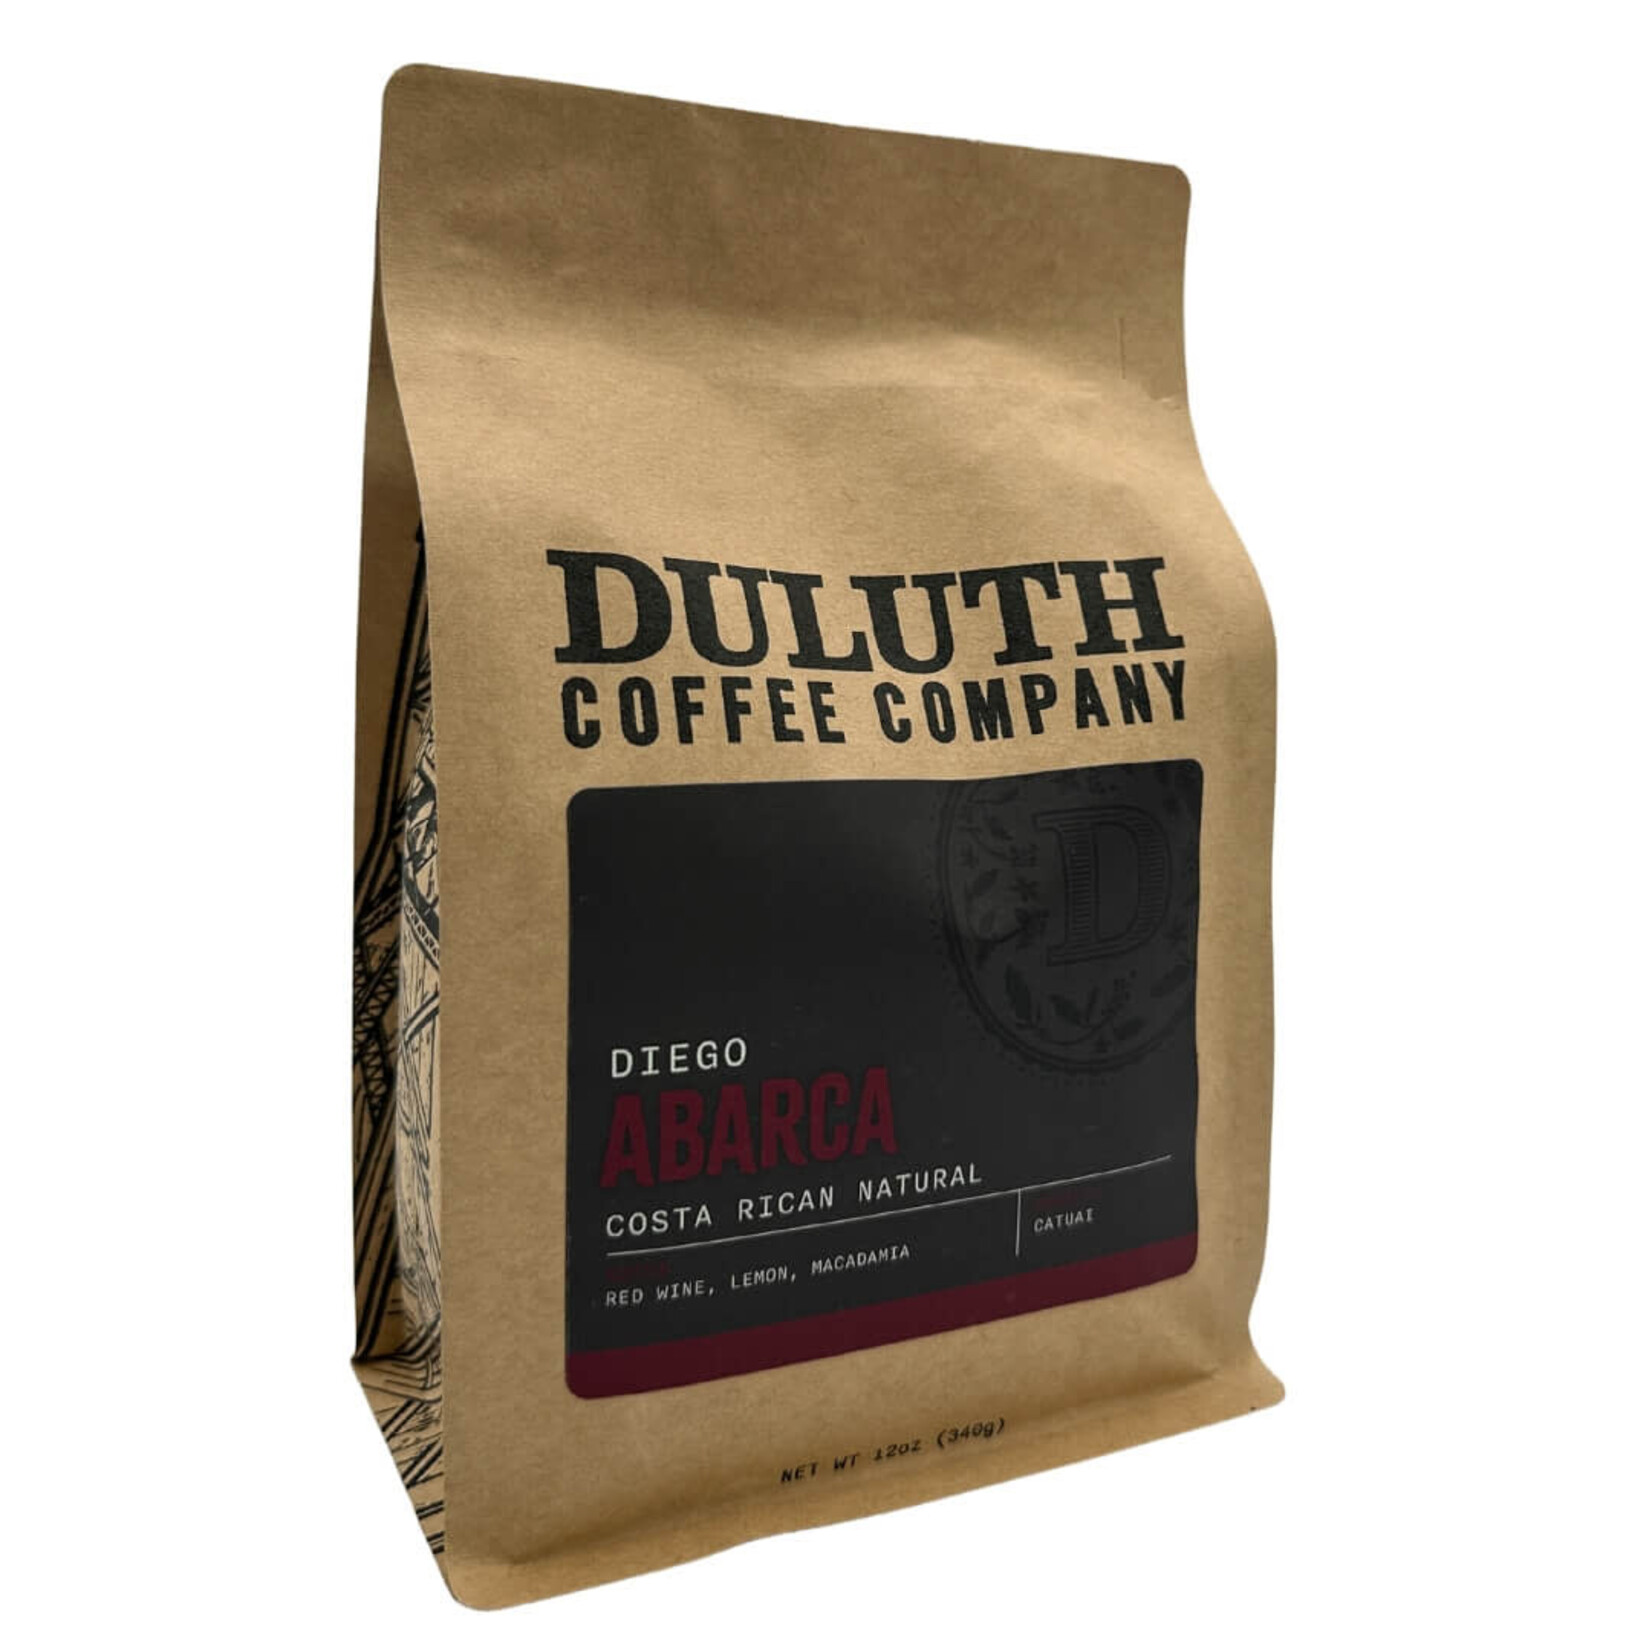 Duluth Coffee Company Diego Abarca 12oz Whole Bean